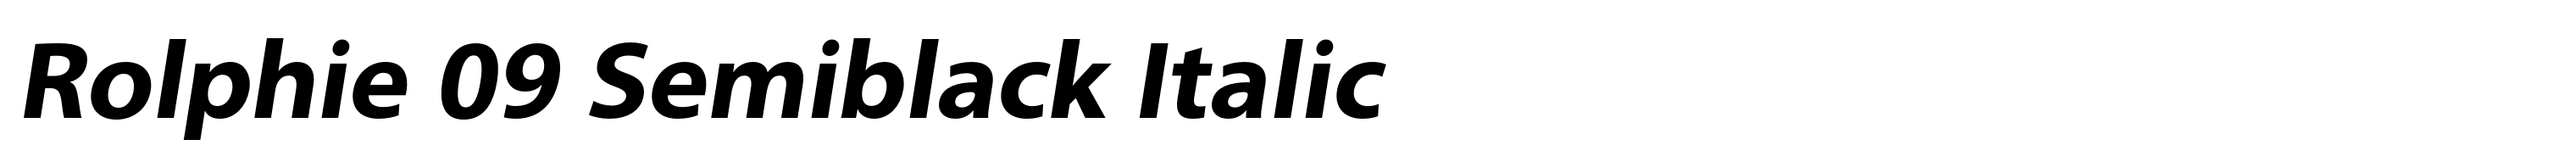 Rolphie 09 Semiblack Italic